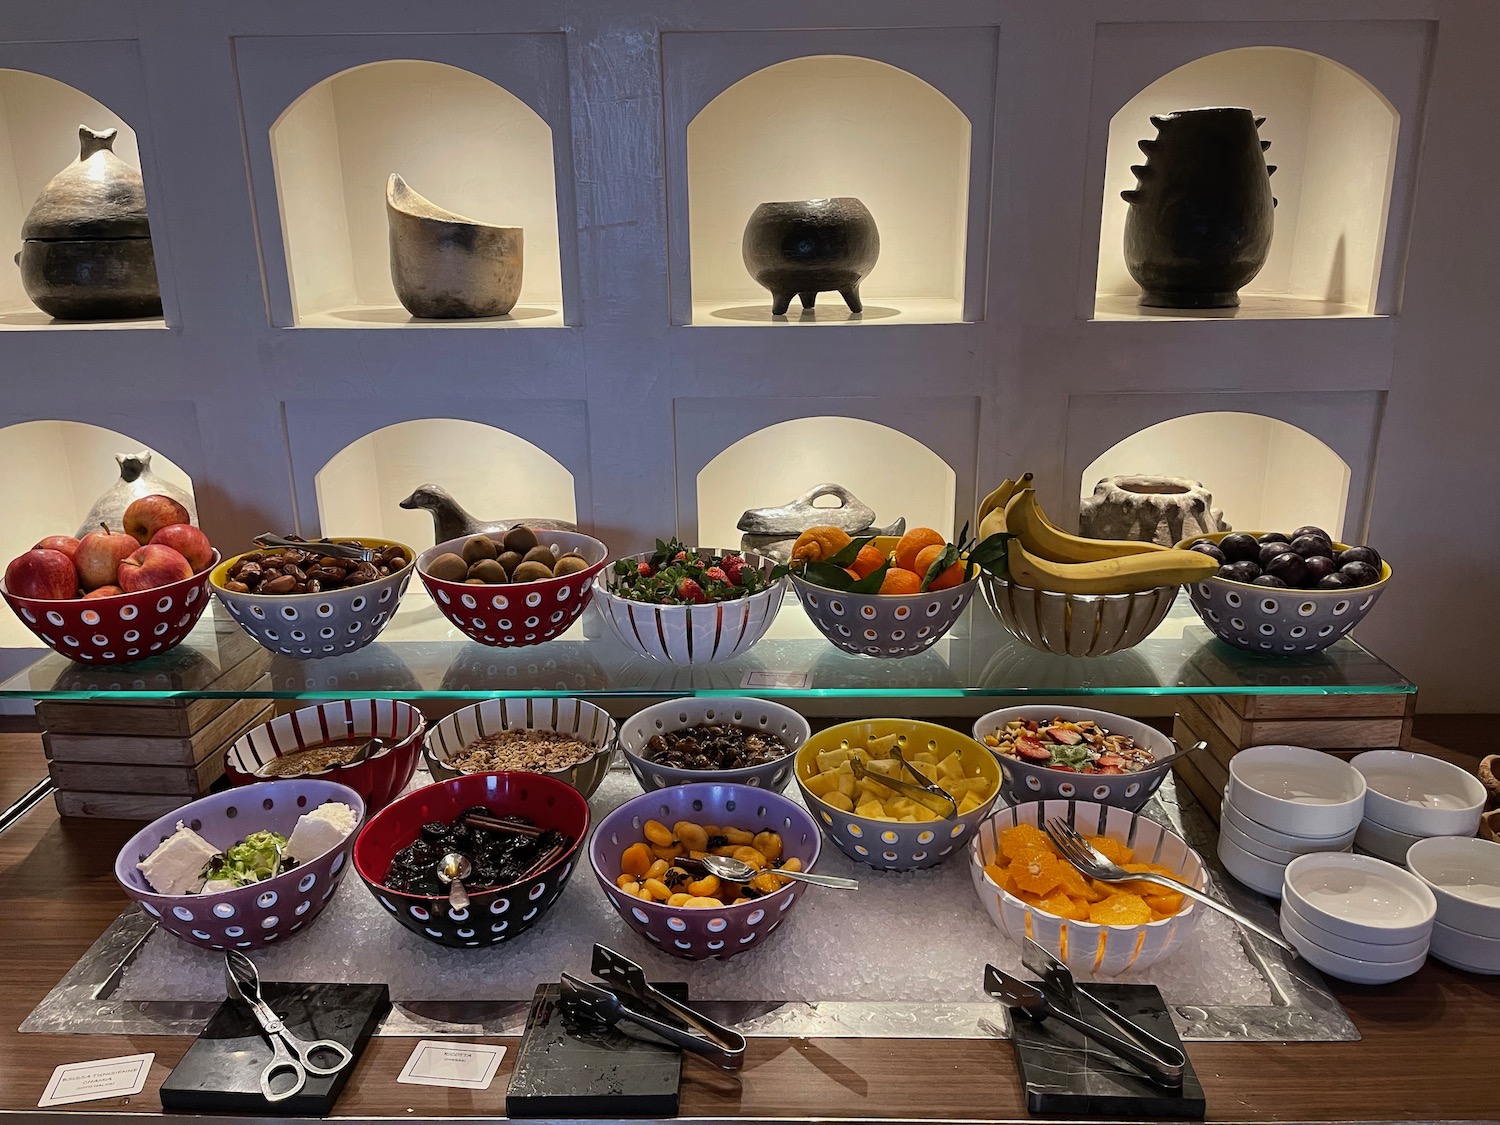 a display of bowls of food